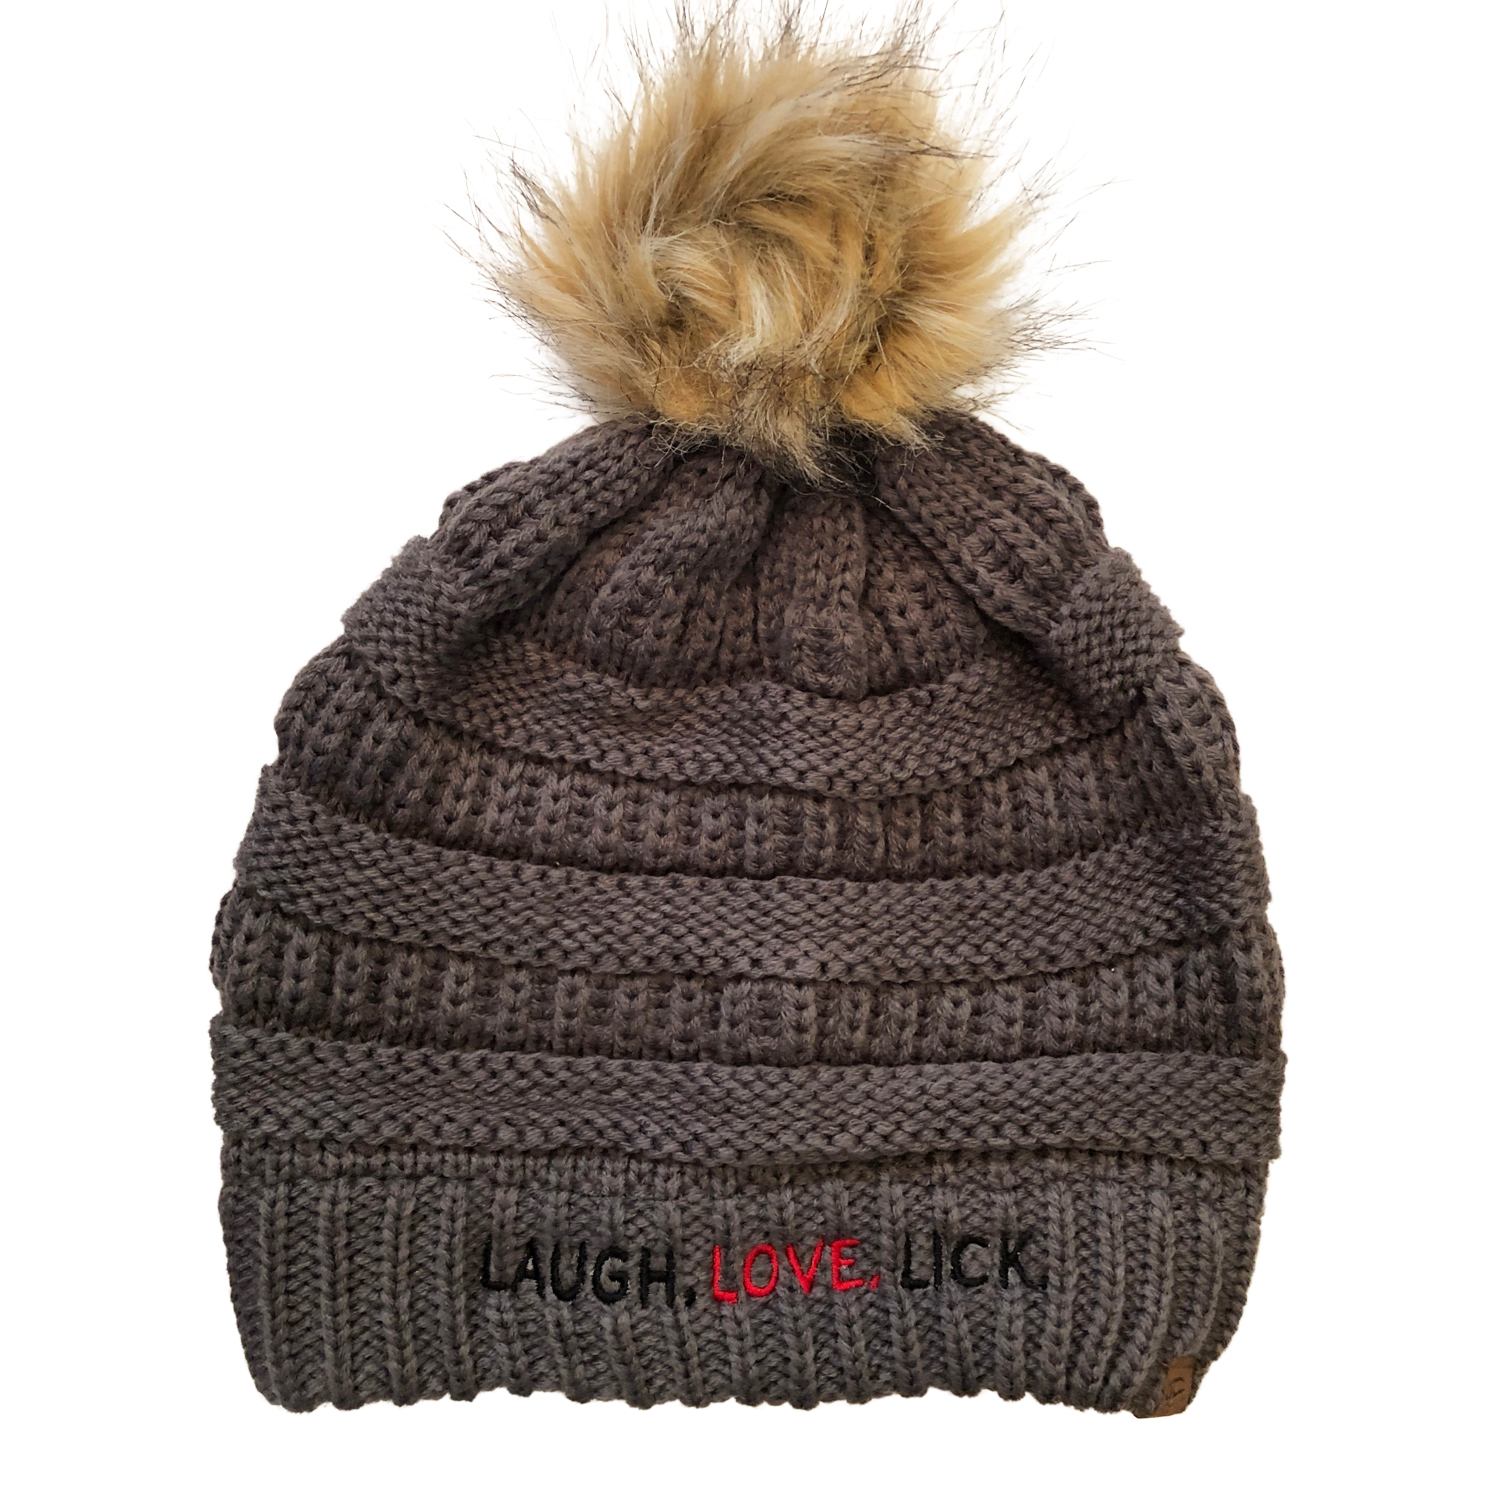 Beau Tyler - Laugh Love Lick winter knit hat faux pom gray 1 front temp